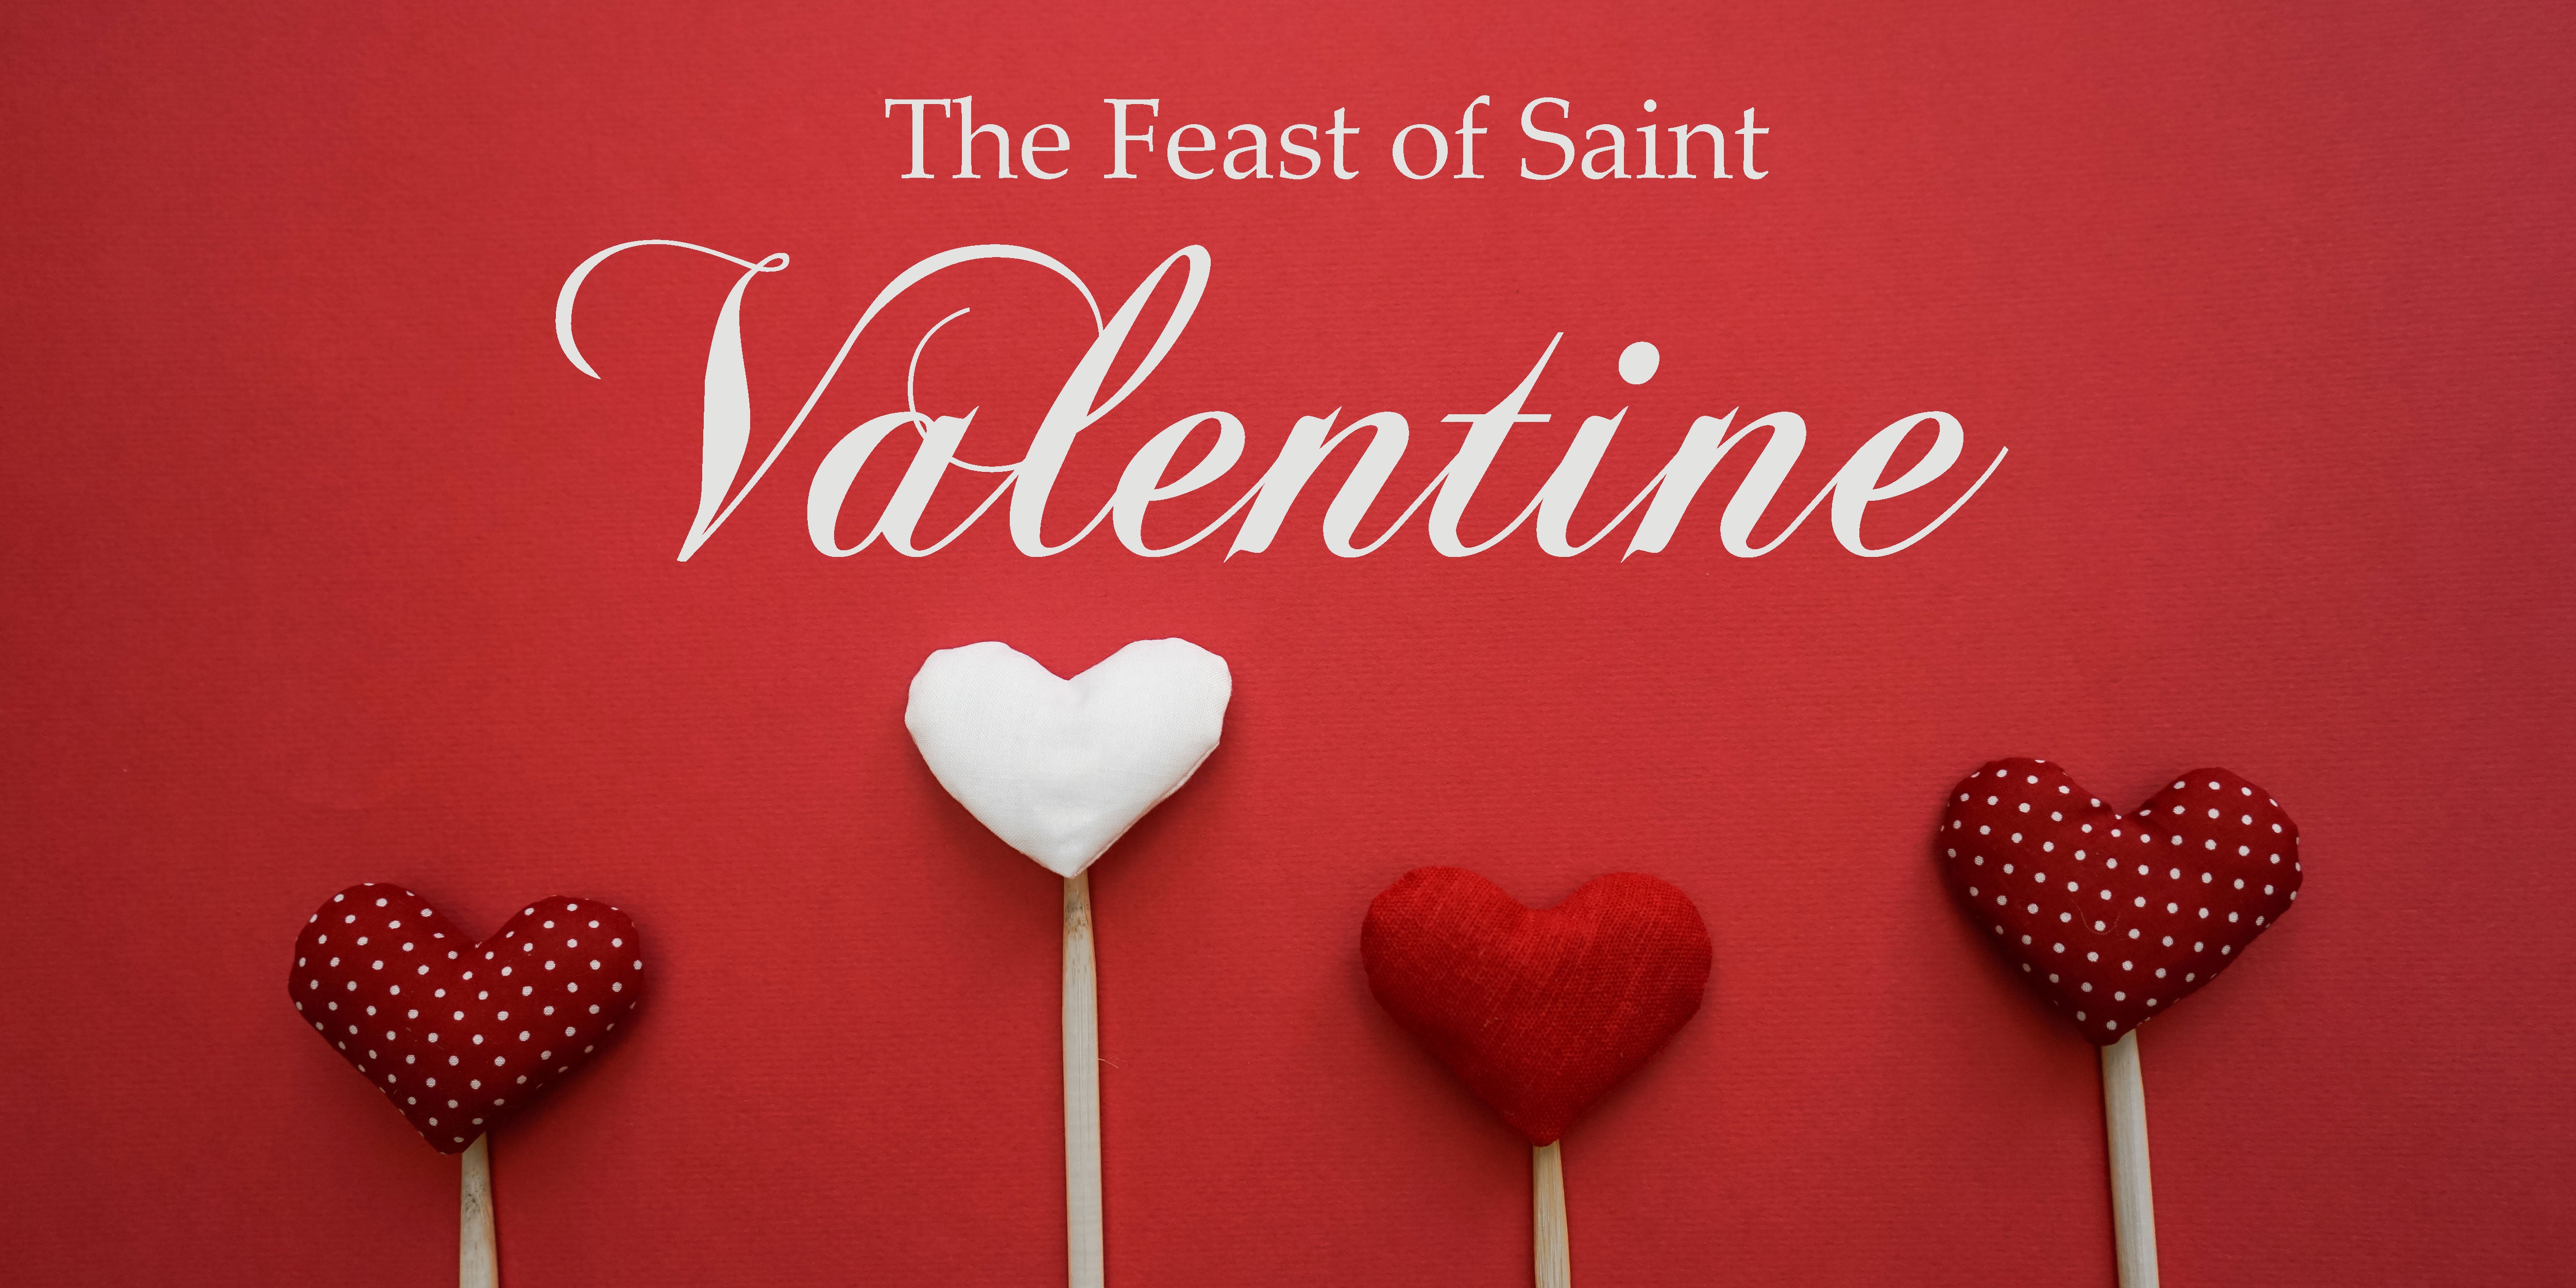 The Feast of Saint Valentine